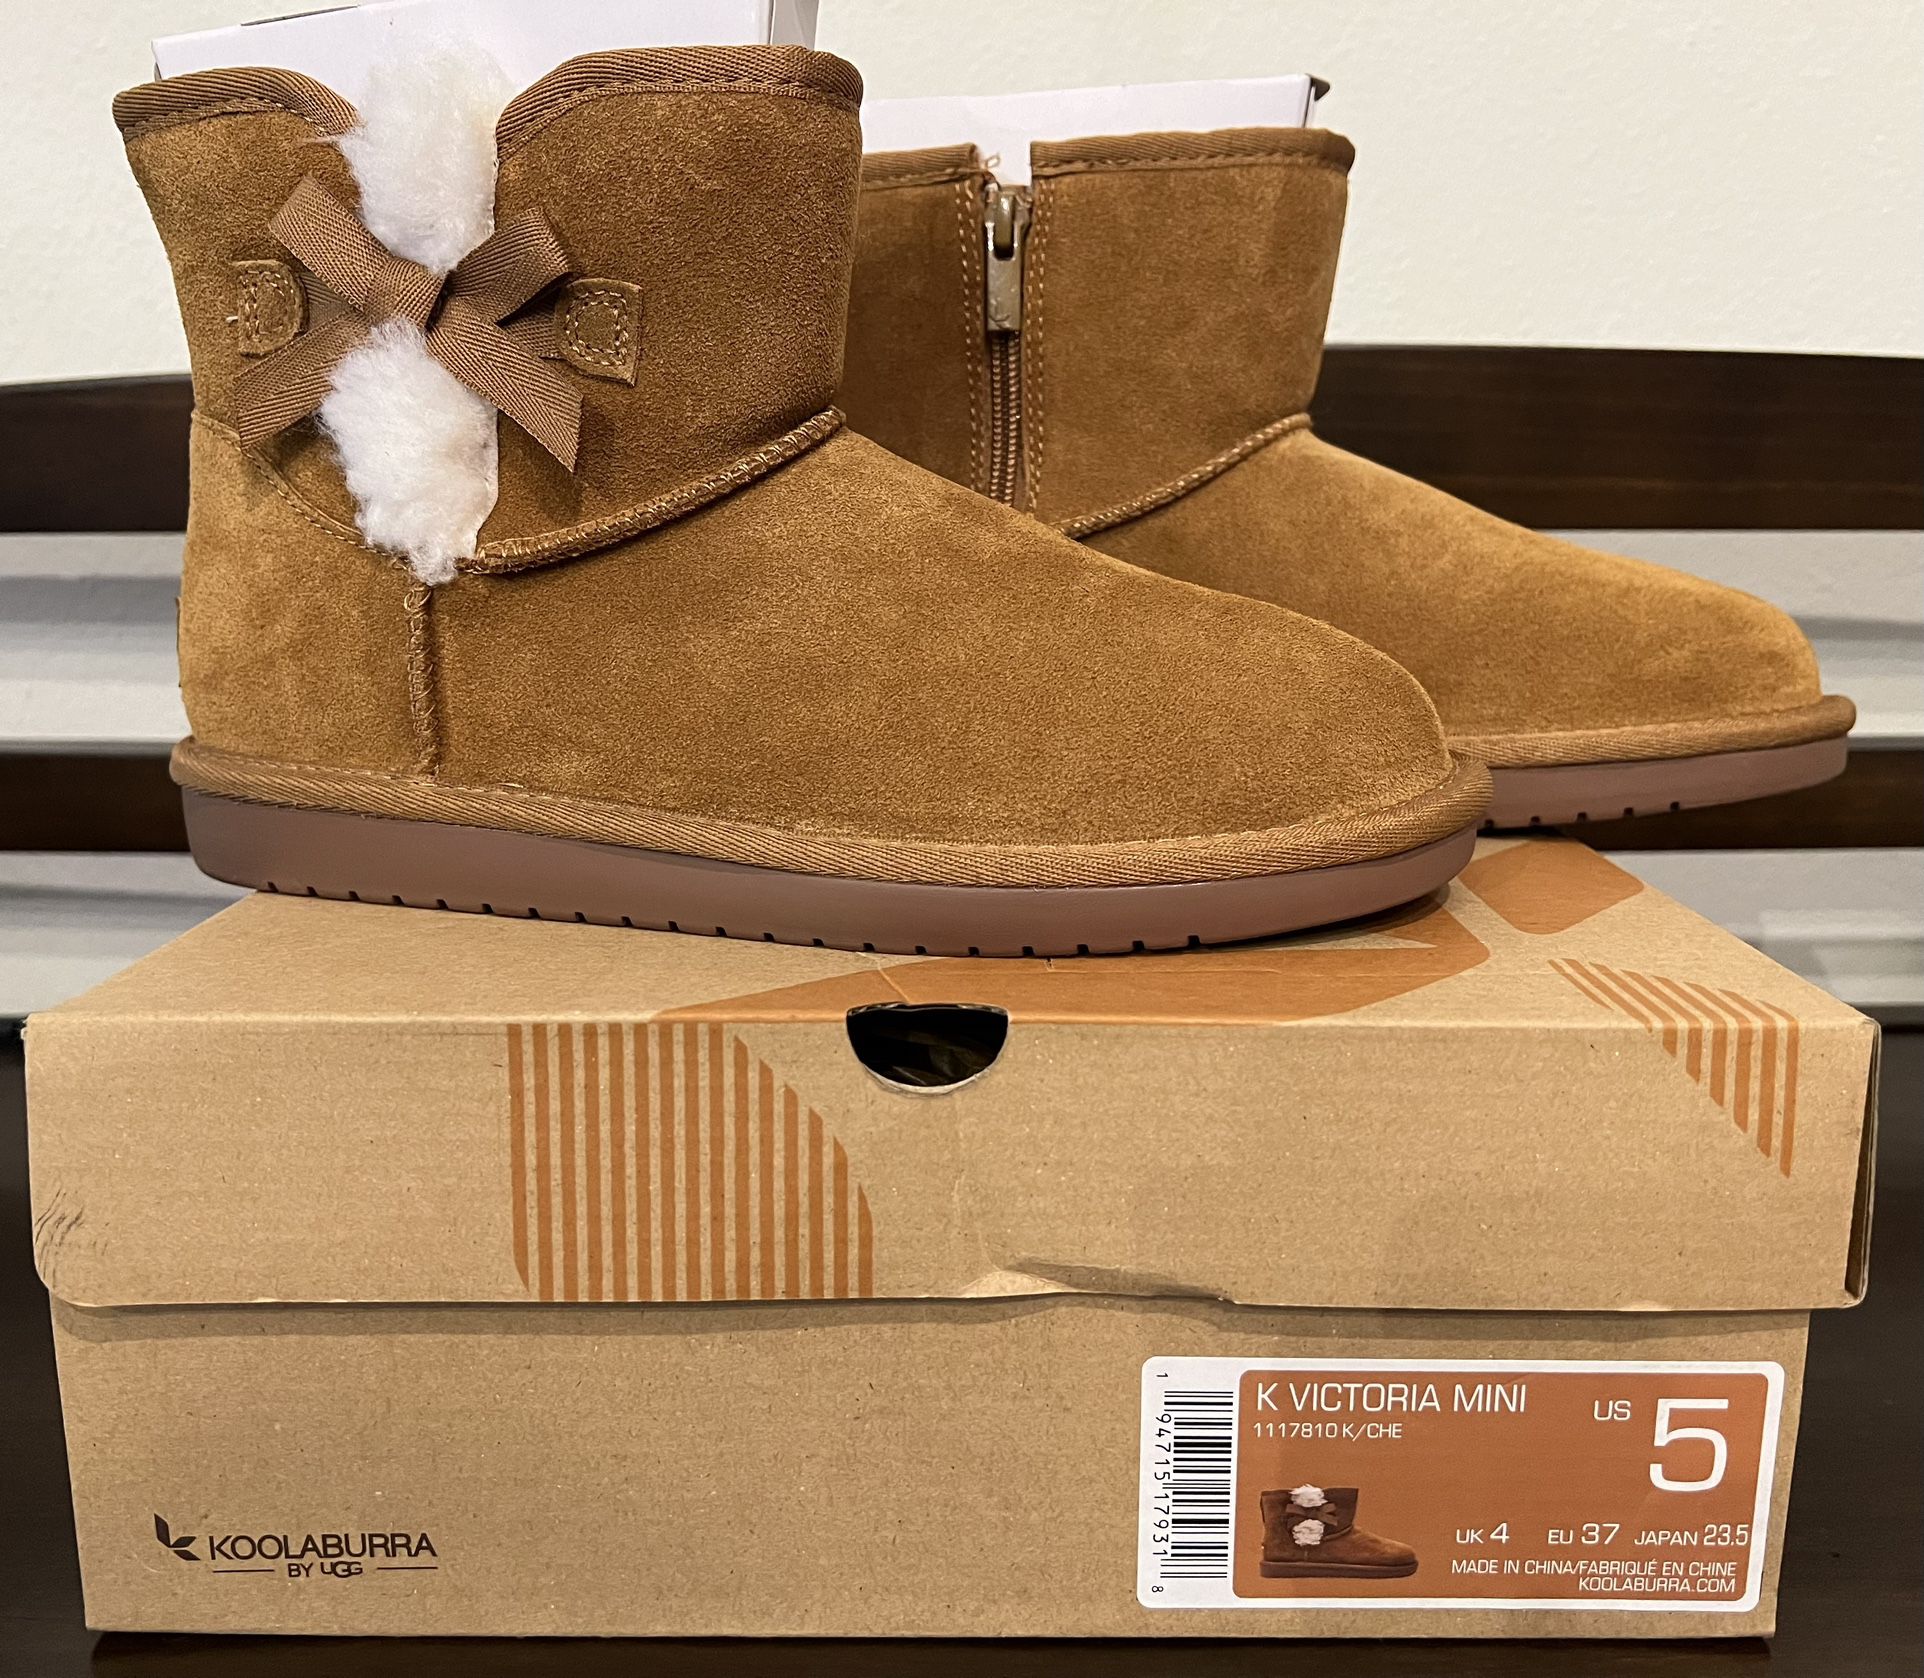 Brand New Koolaburra By Ugg Boots Size 5